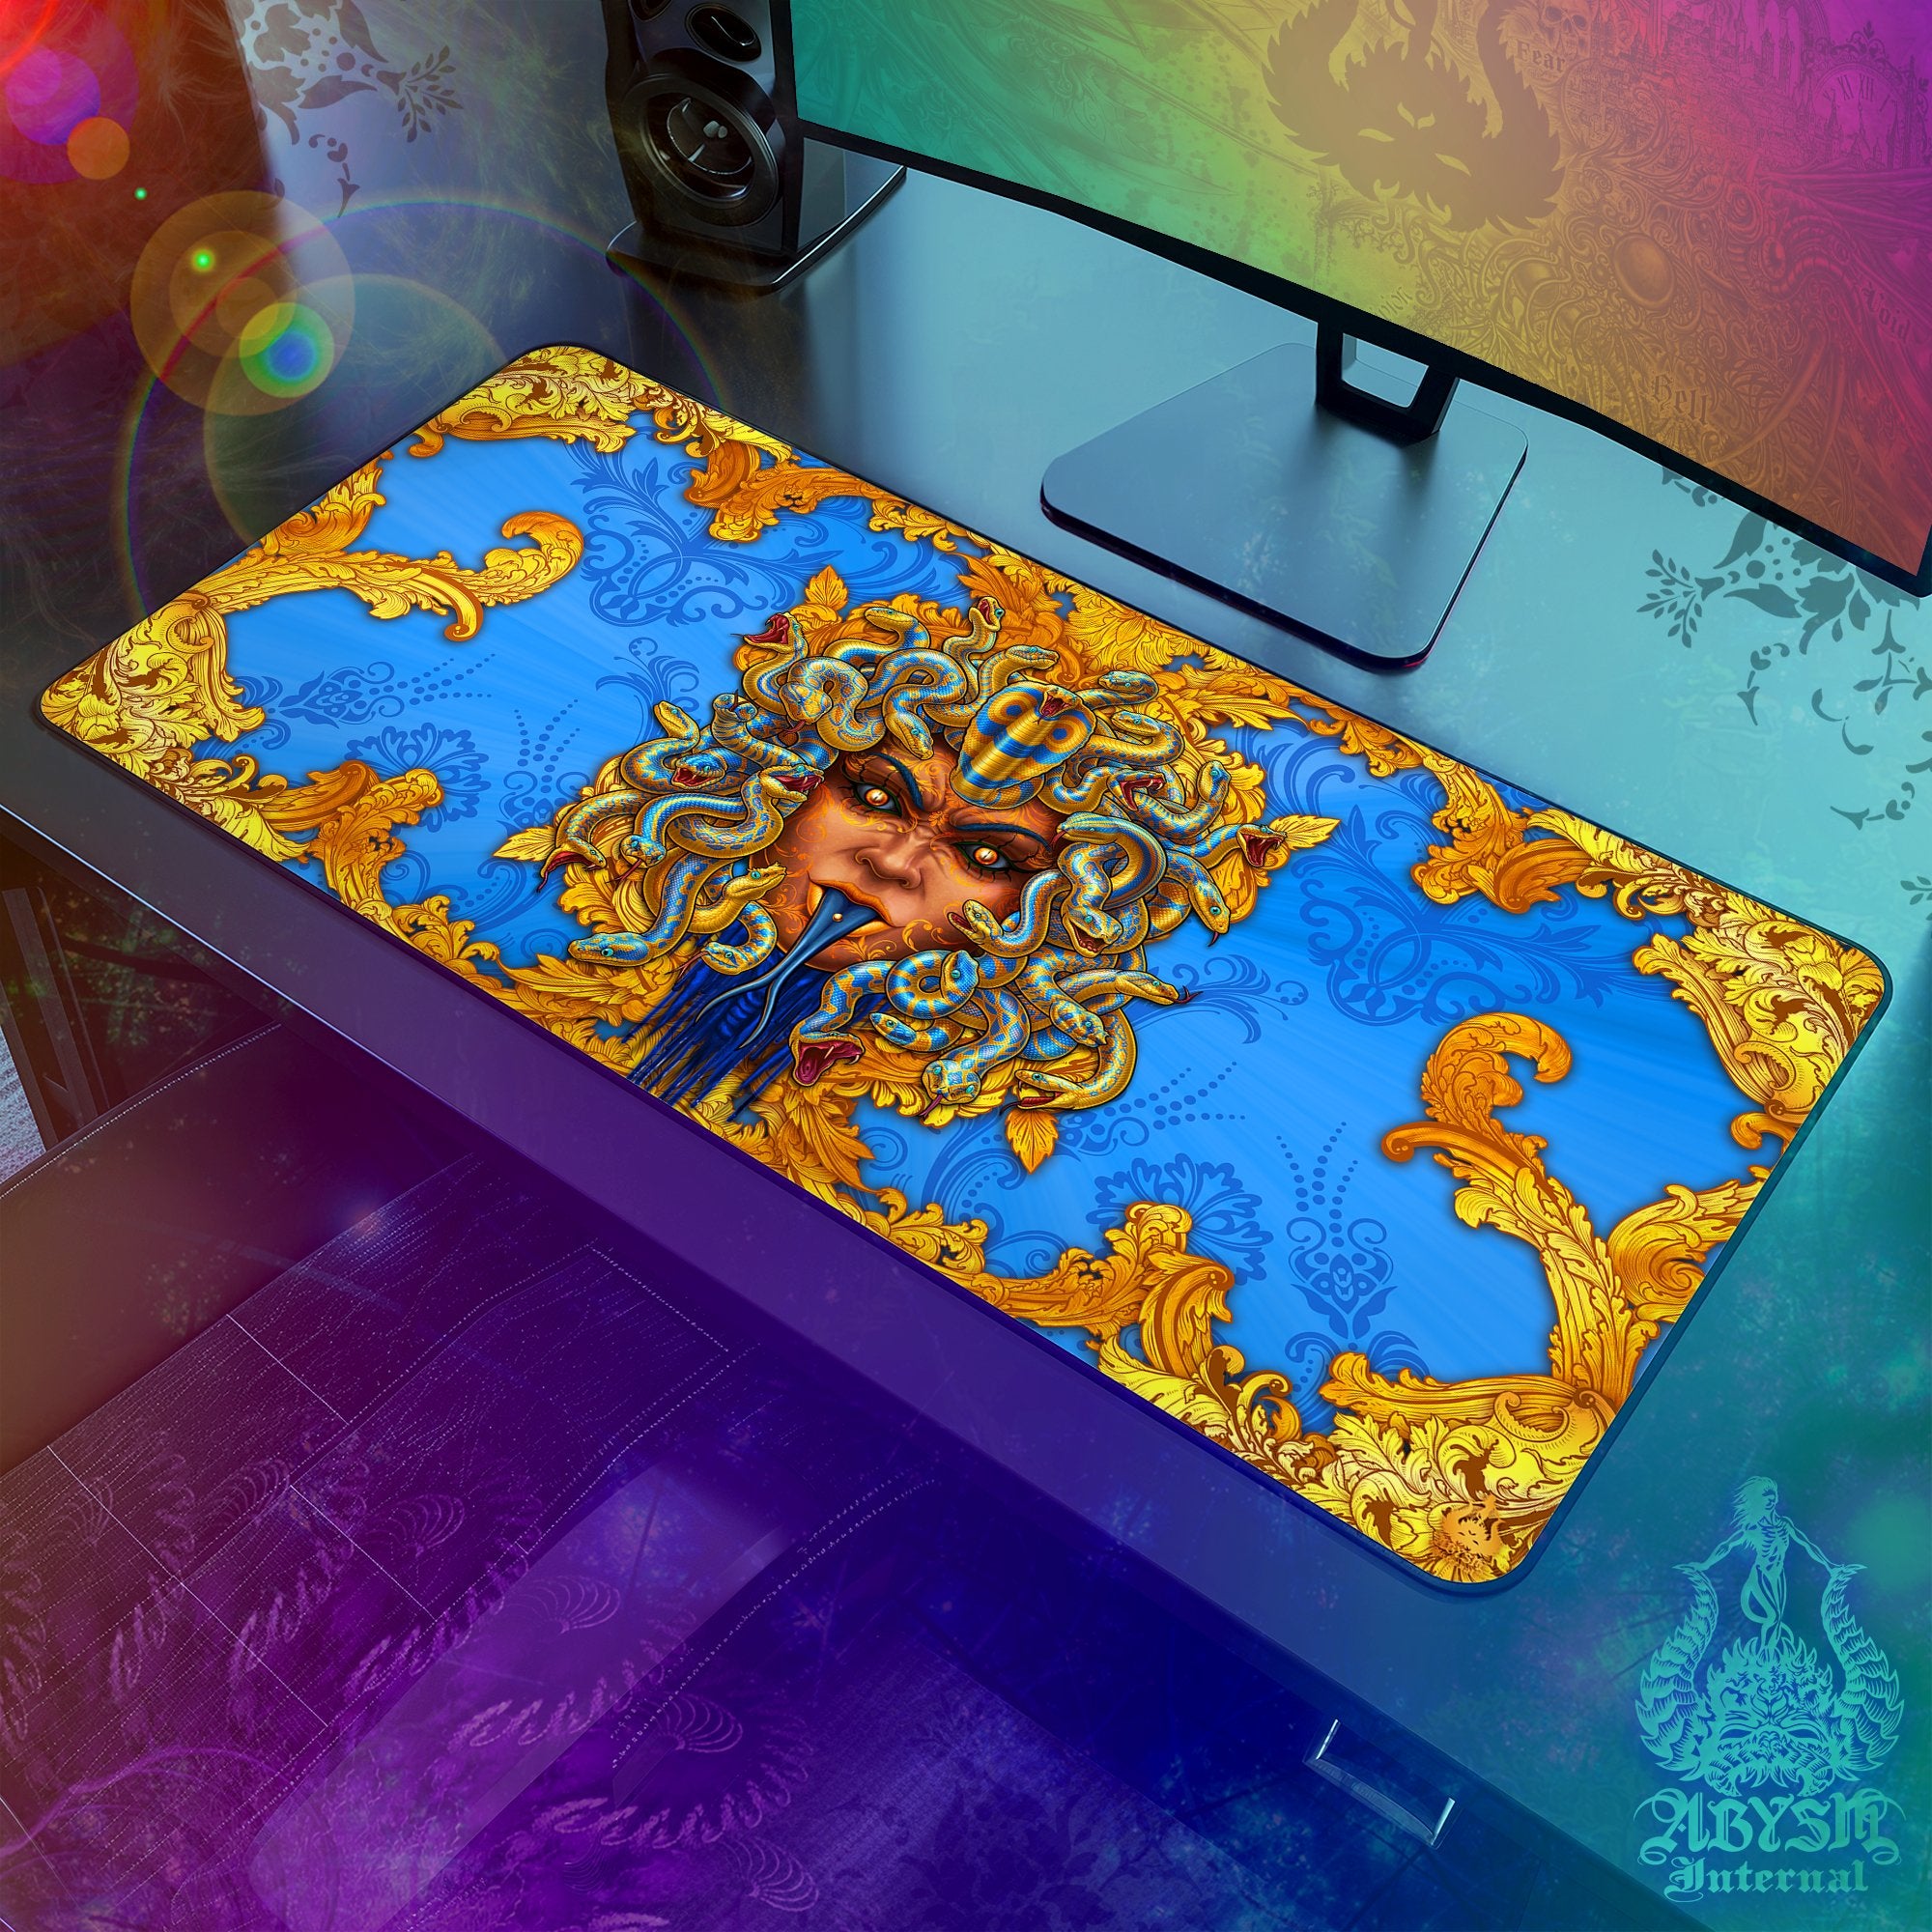 Medusa Workpad, Skull Desk Mat, Mythology Gaming Mouse Pad, Gamer Table Protector Cover, Dark Fantasy Art Print - Cyan Gold, 2 Options - Abysm Internal